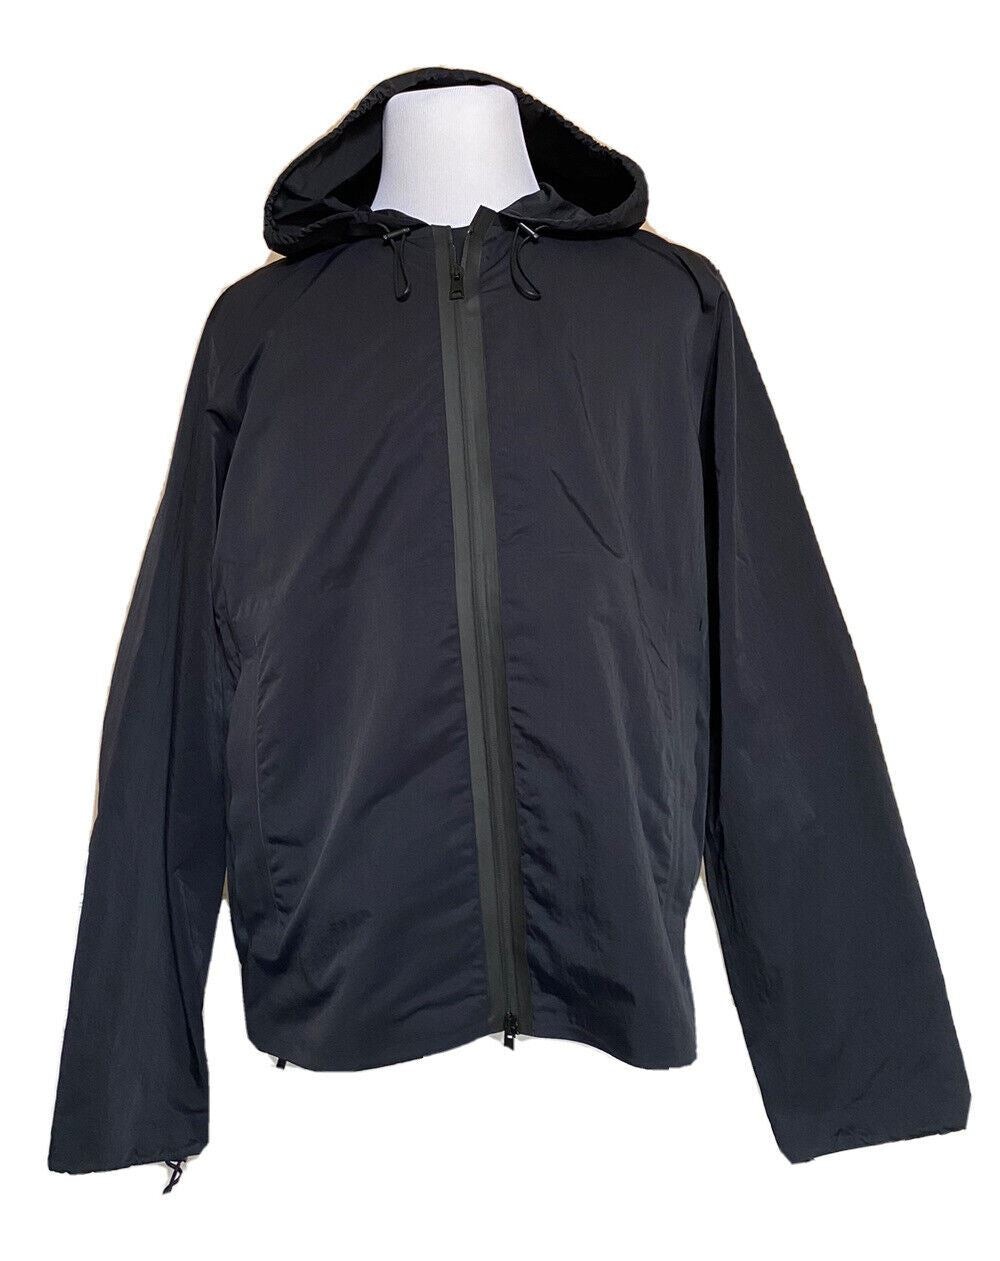 NWT $1850 Bottega Veneta Men's Blouson Tech Nylon Black Jacket with Hoodie 42 US